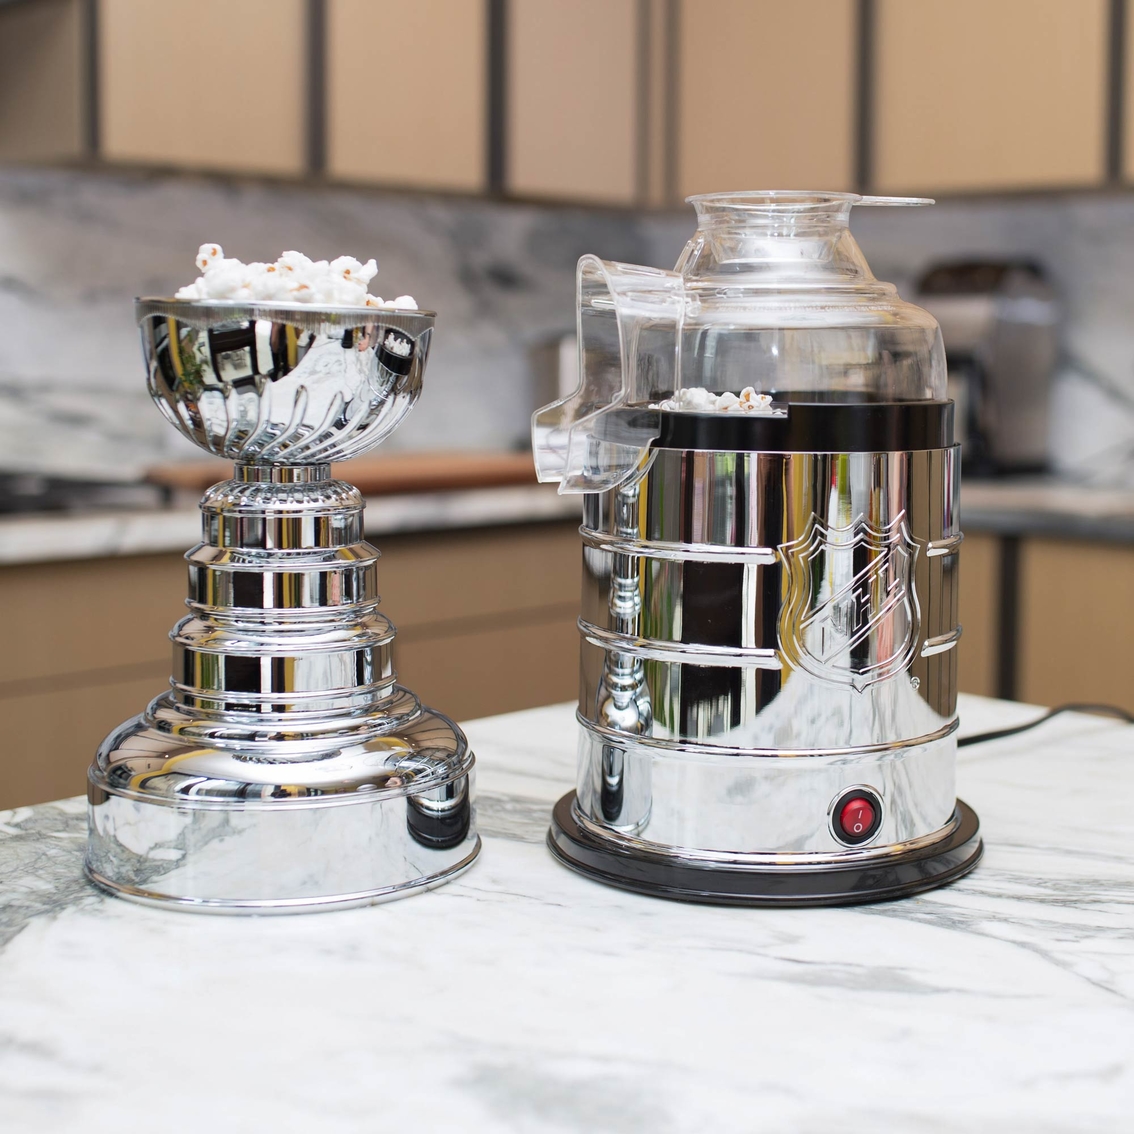 Stanley Cup Popcorn Maker - Image 4 of 4